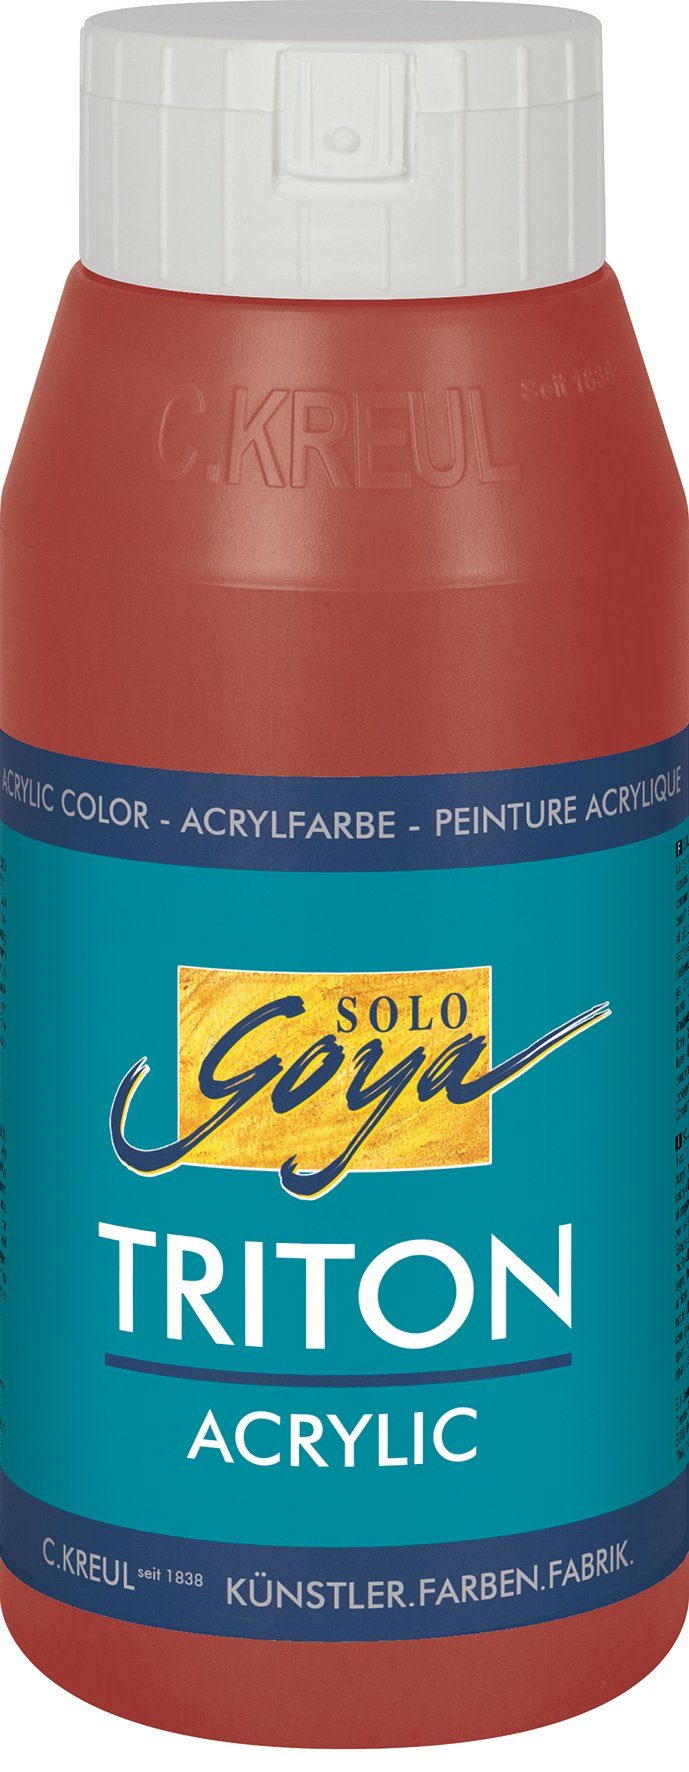 Kreul Acrylic, Acrylfarbe Oxydrot Triton Solo Goya 750 ml